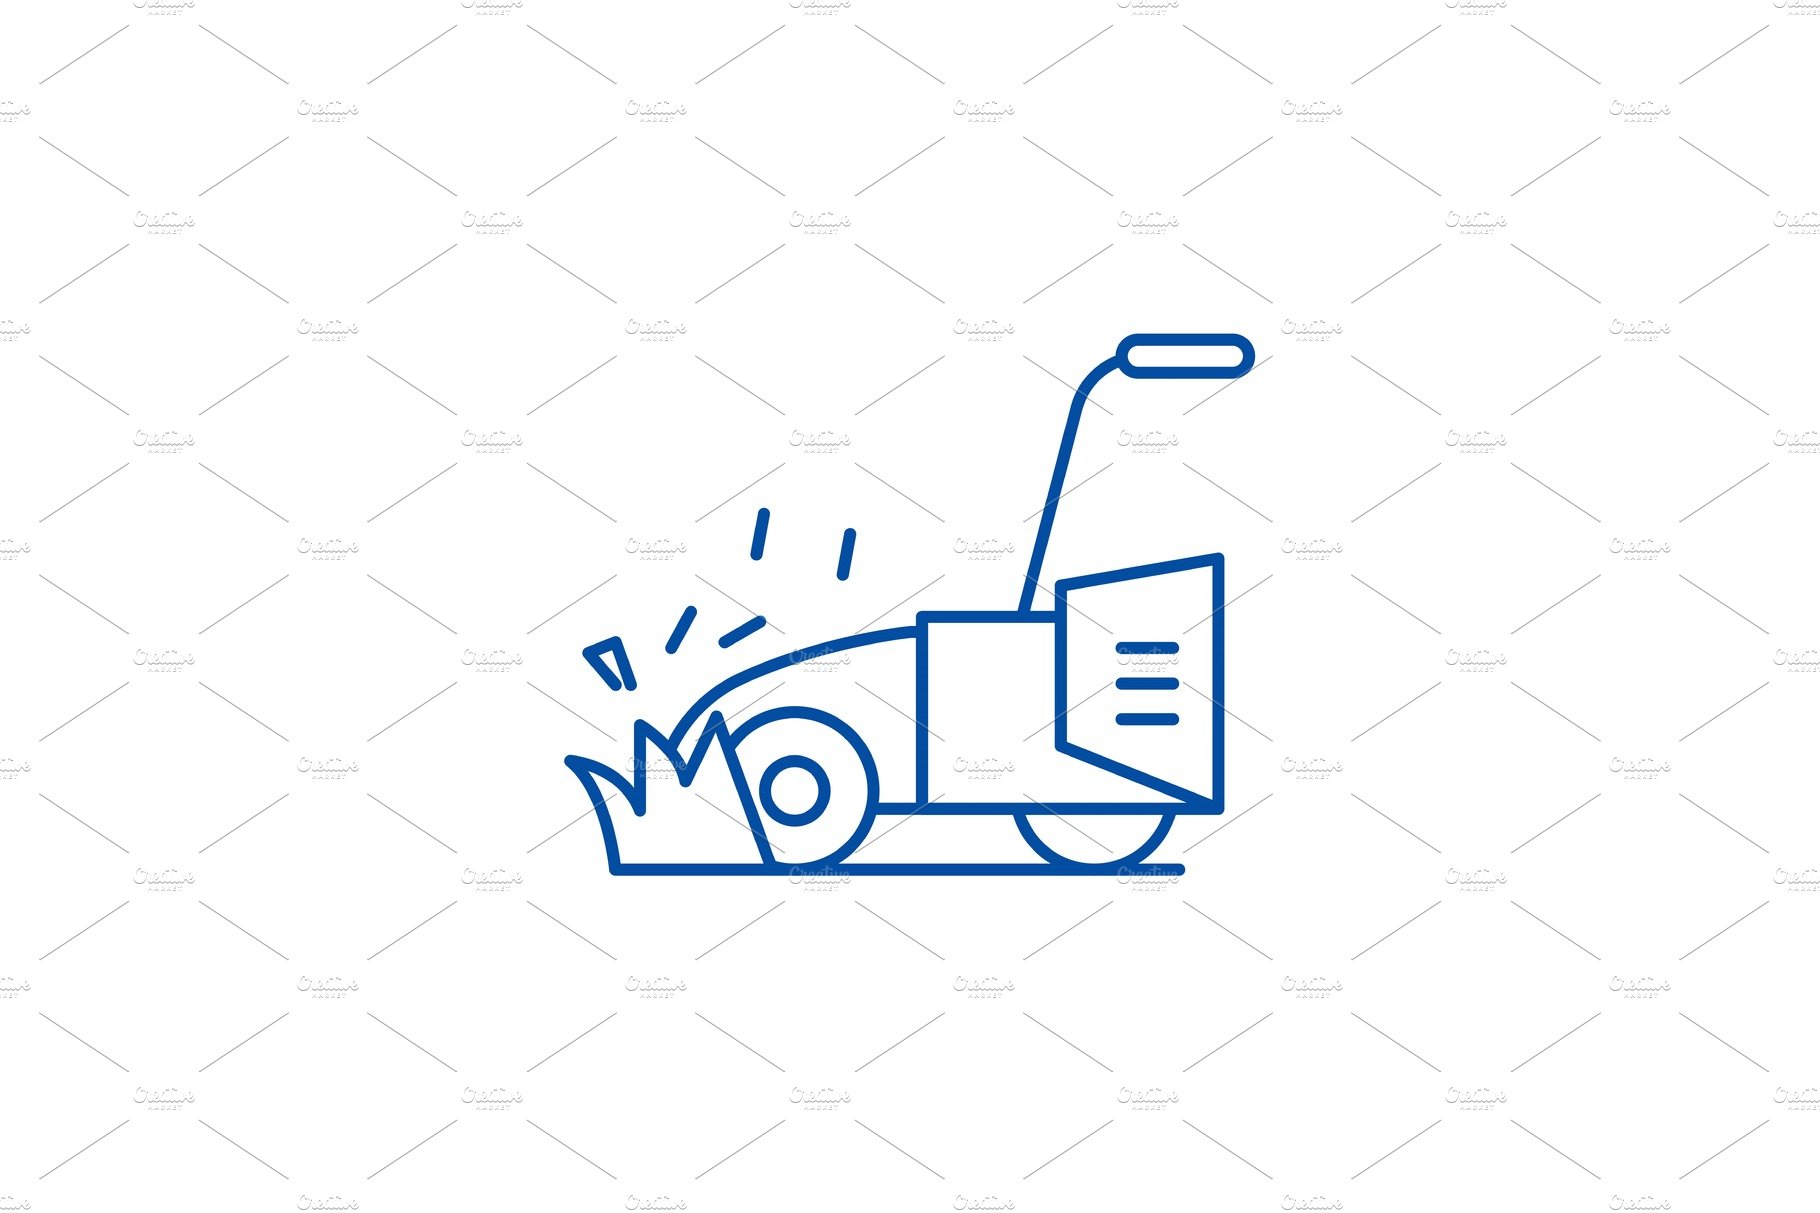 Lawn mower line icon concept. Lawn cover image.